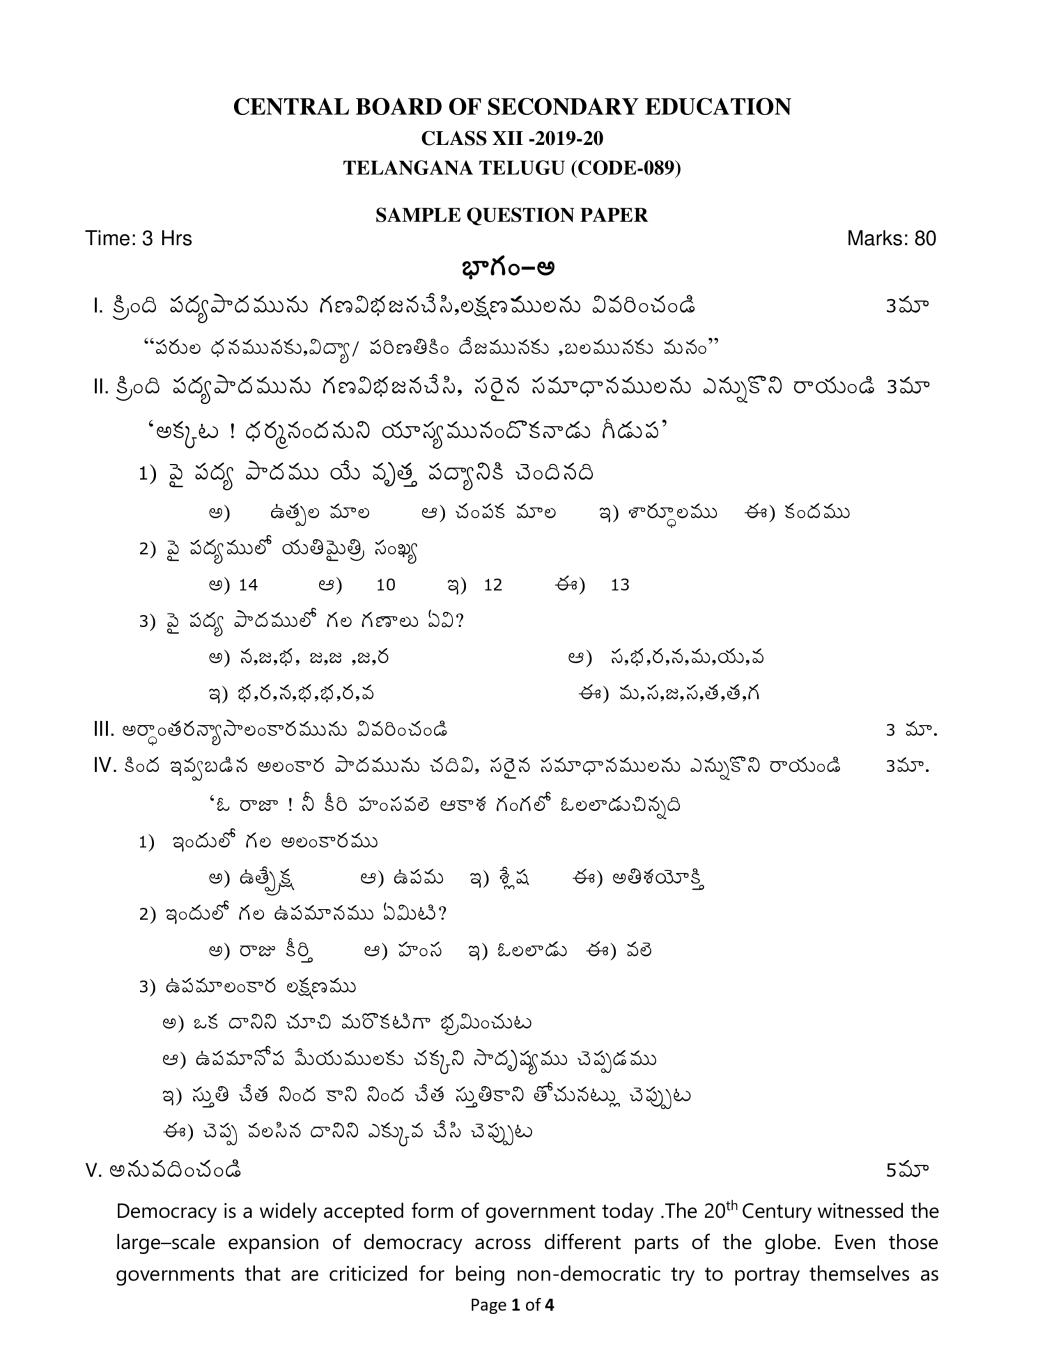 CBSE Class 12 Sample Paper 2020 for Telugu Telangana - Page 1